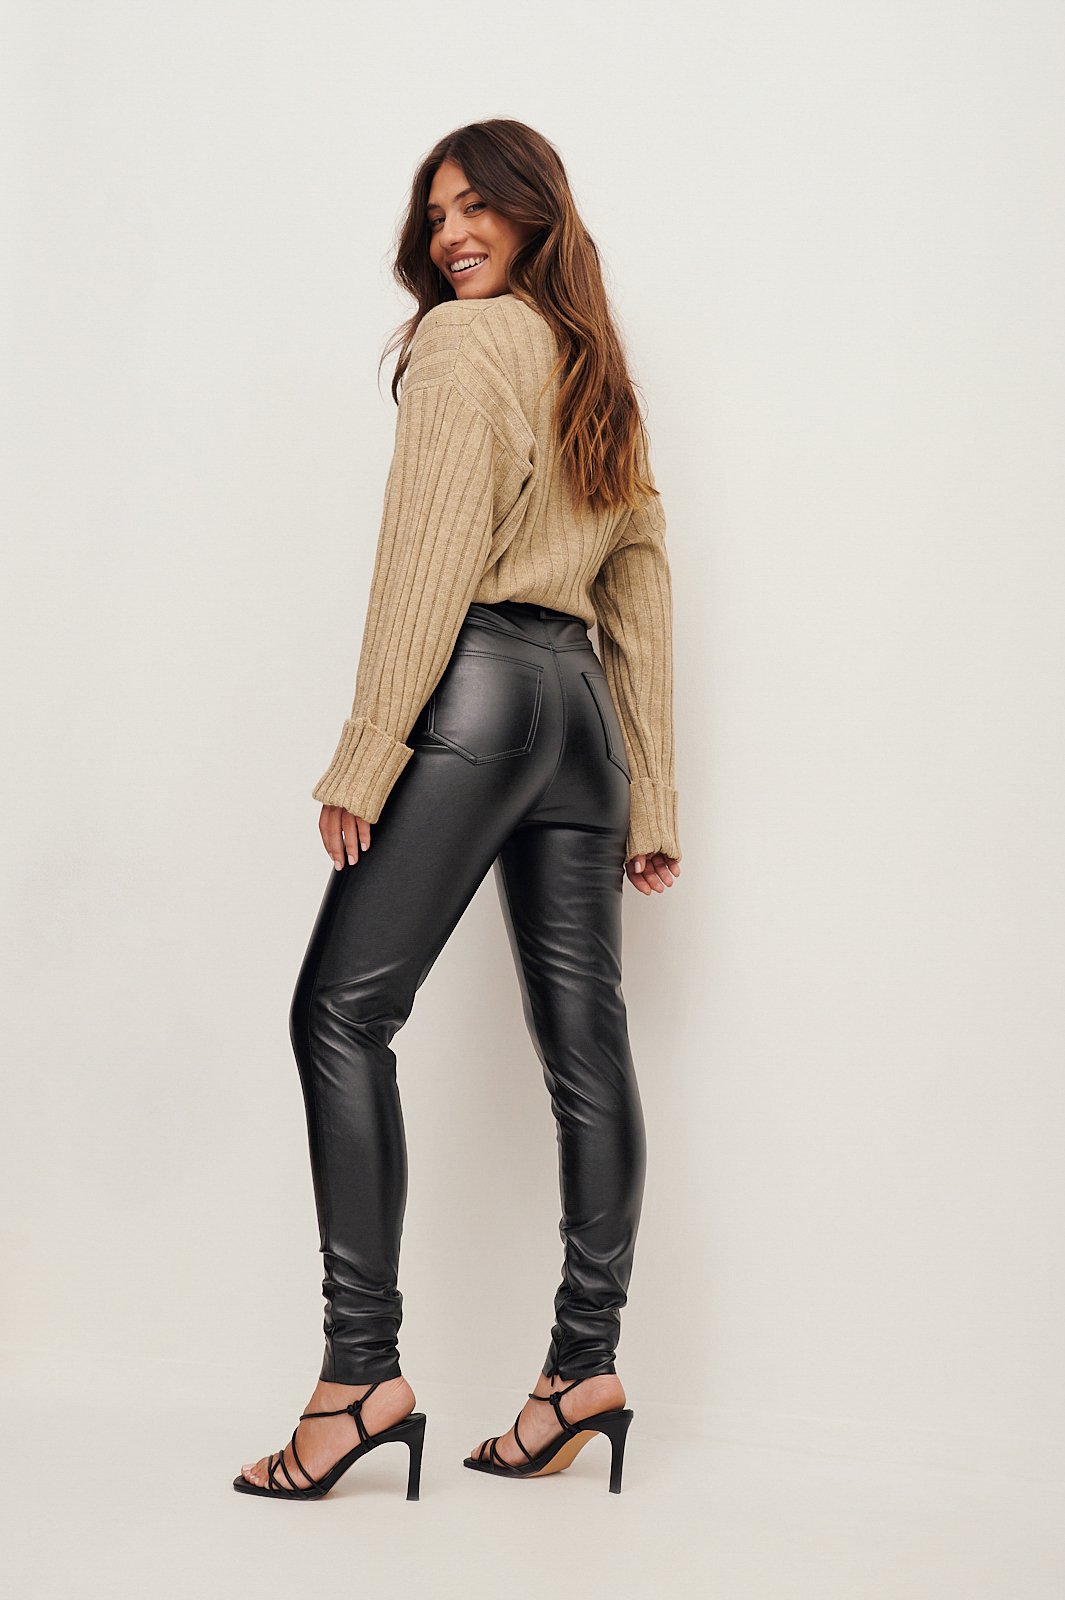 Women's Leather PU Wet Look Trousers High Waist Skinny Leggings Pants GIFT HOT